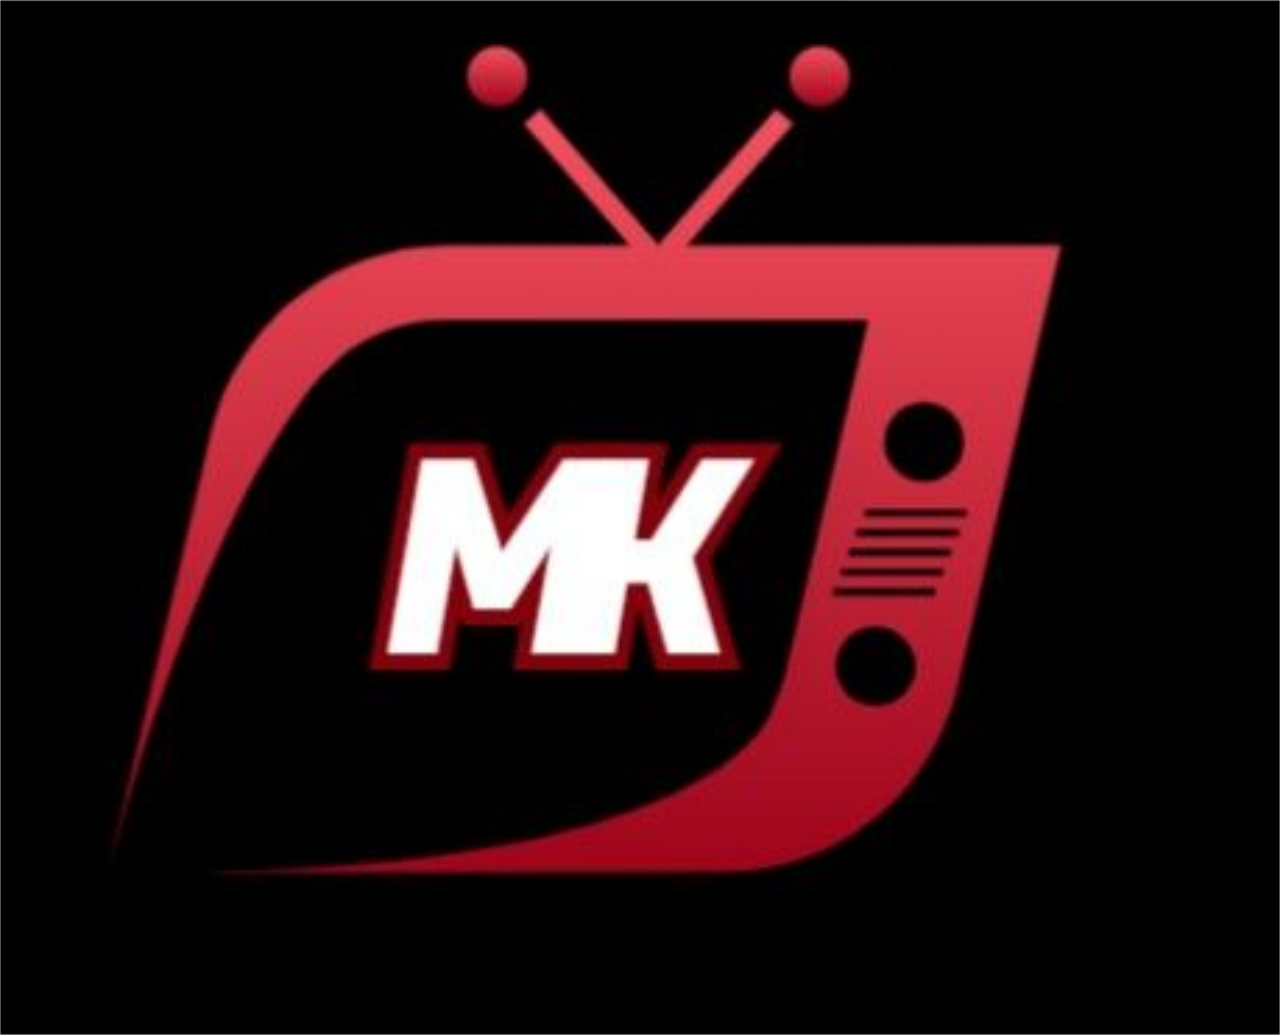 MK SMART's web page